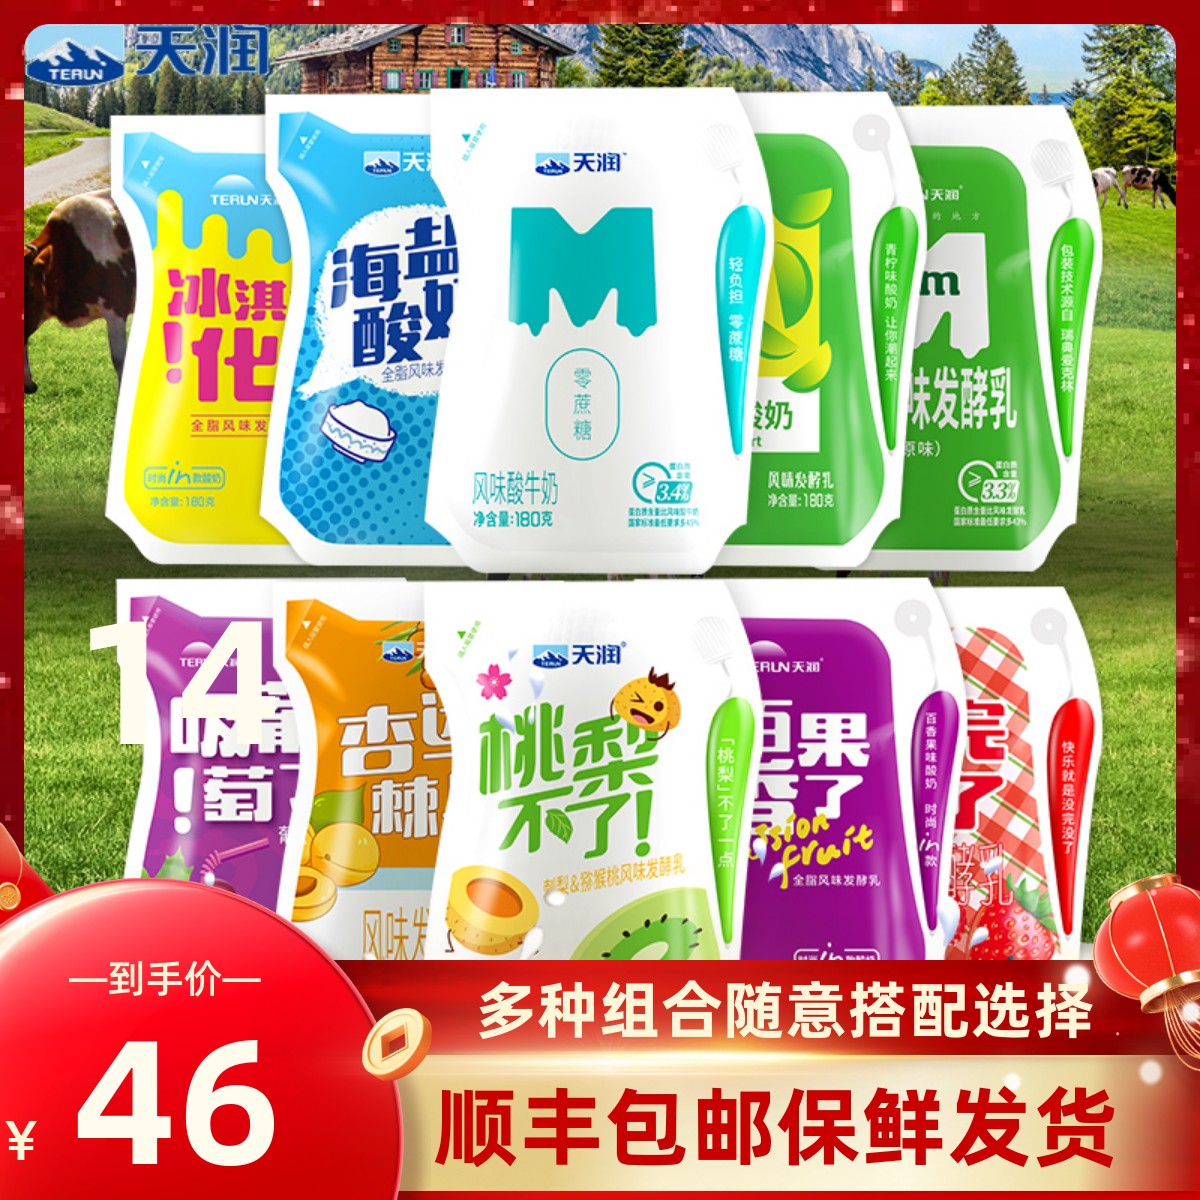 terun新疆天润酸奶浓缩原味冰淇淋发酵乳低温奶整箱装180g*12袋